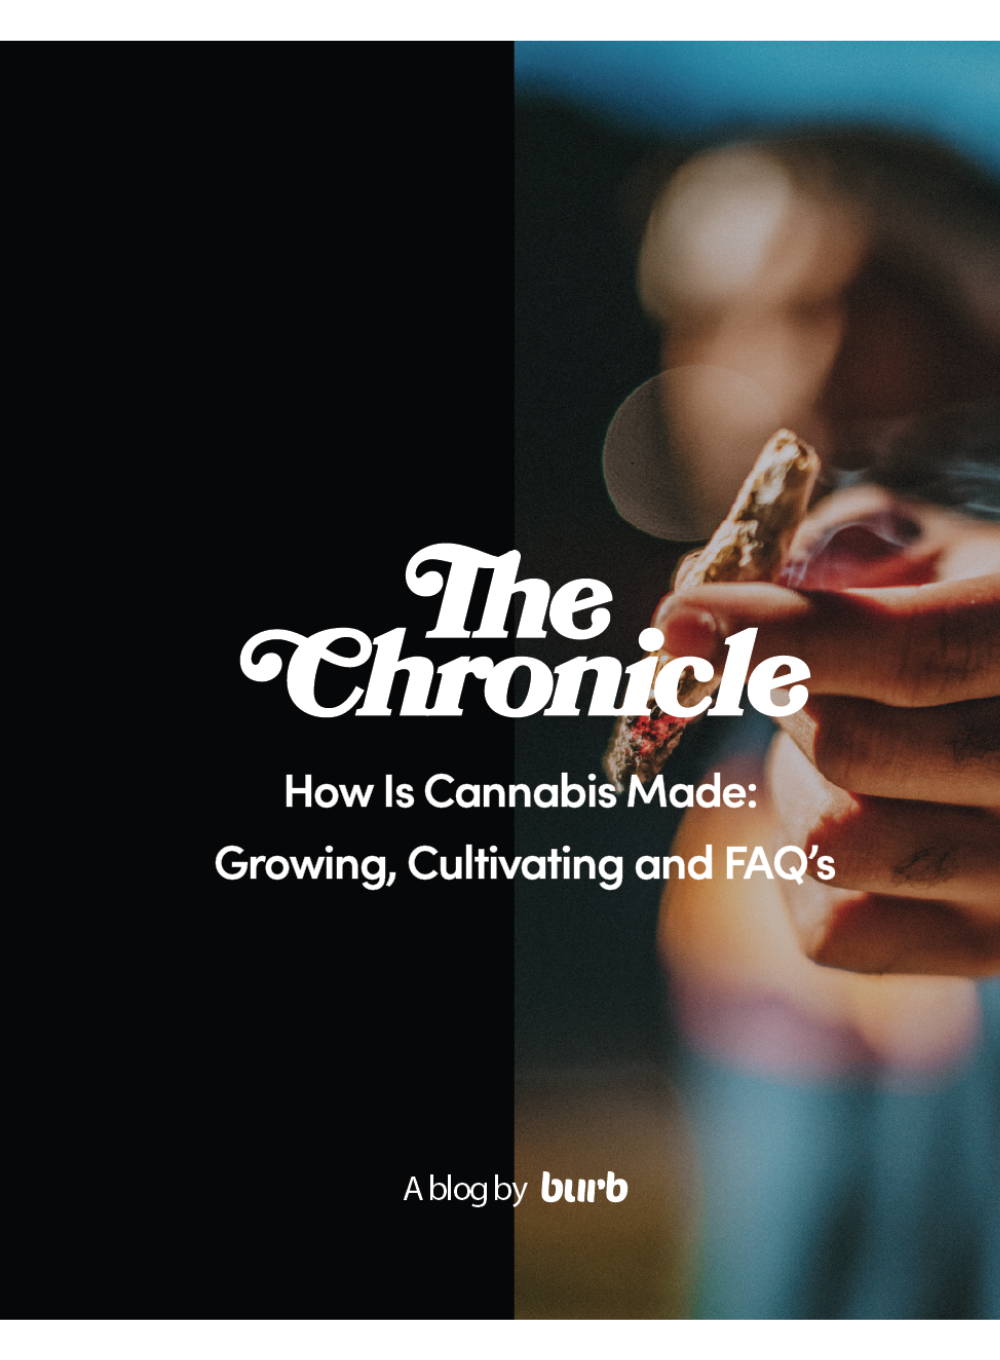 How Is Cannabis Grown?